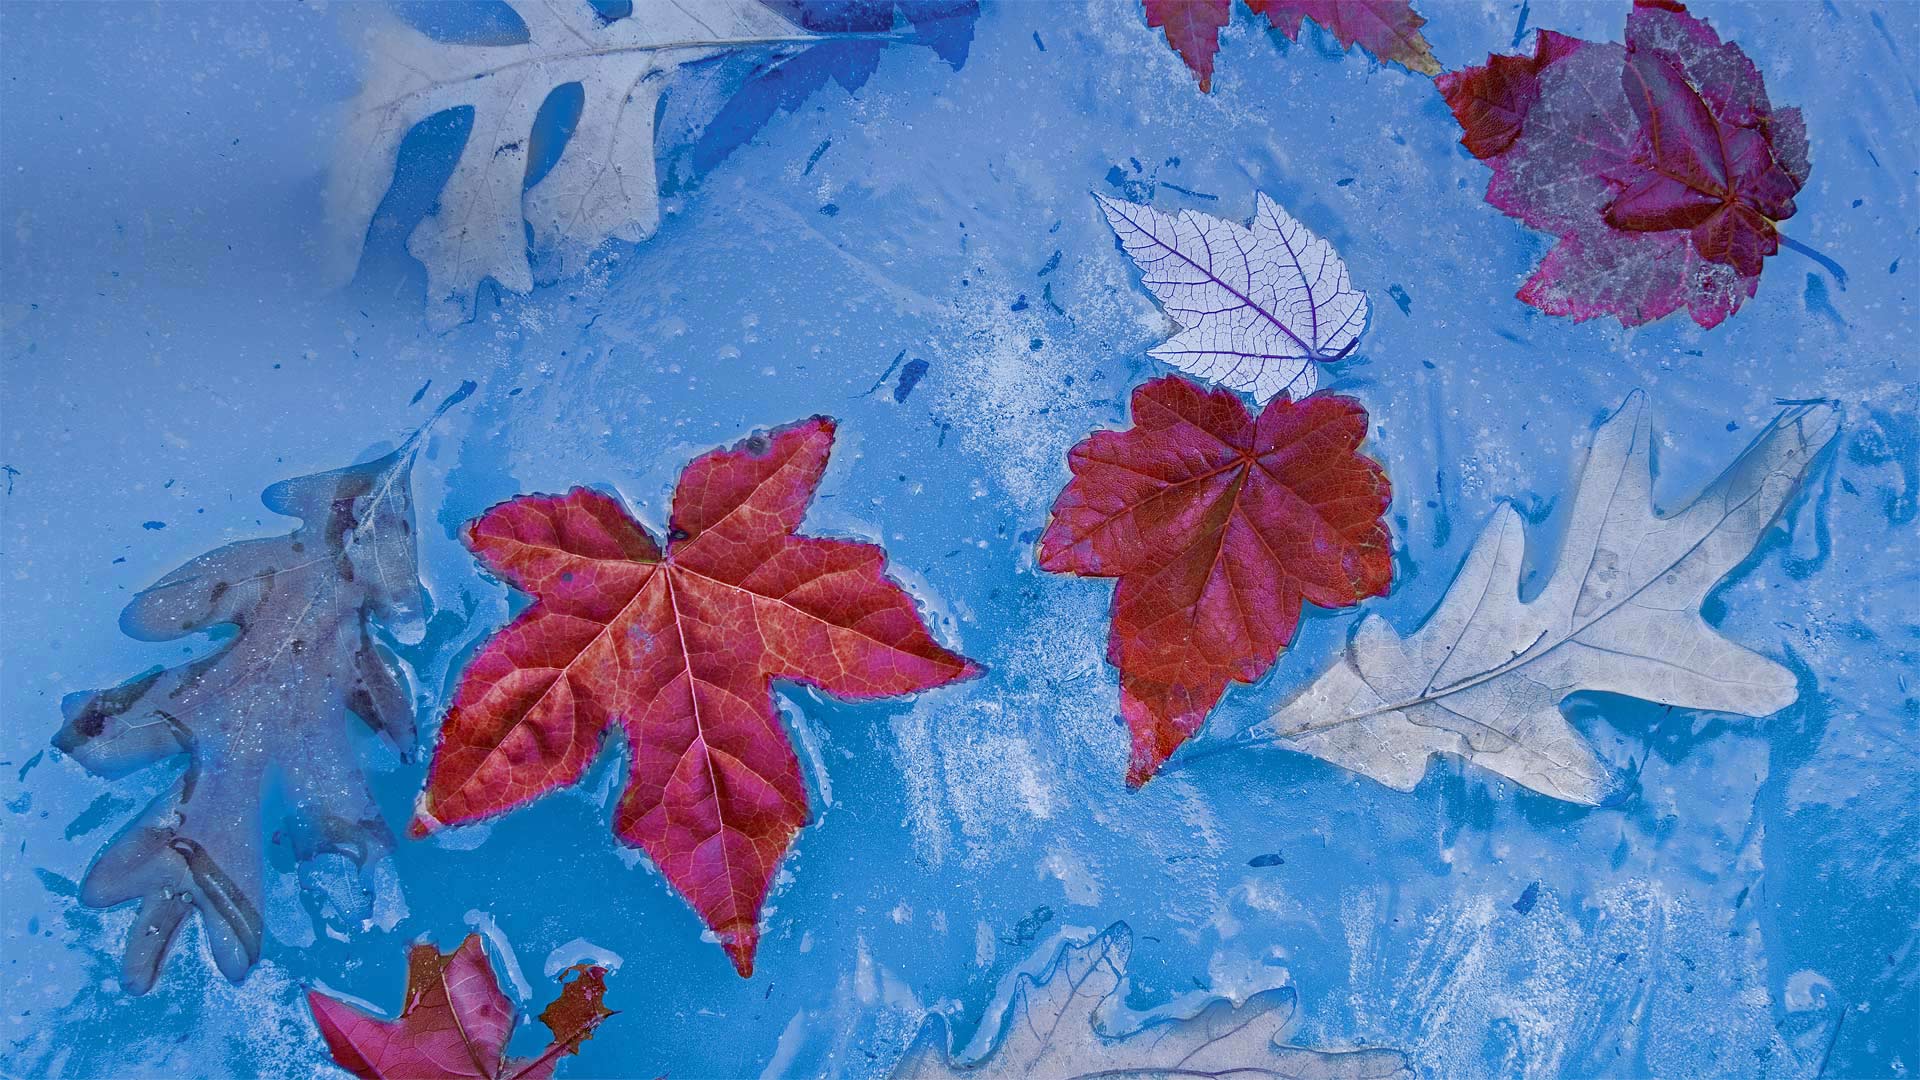 Autumn leaves frozen in ice, Price Lake, Julian Price Memorial Park, Blue Ridge Parkway, North Carolina - Richard Bernabe/Offset by Shutterstock)